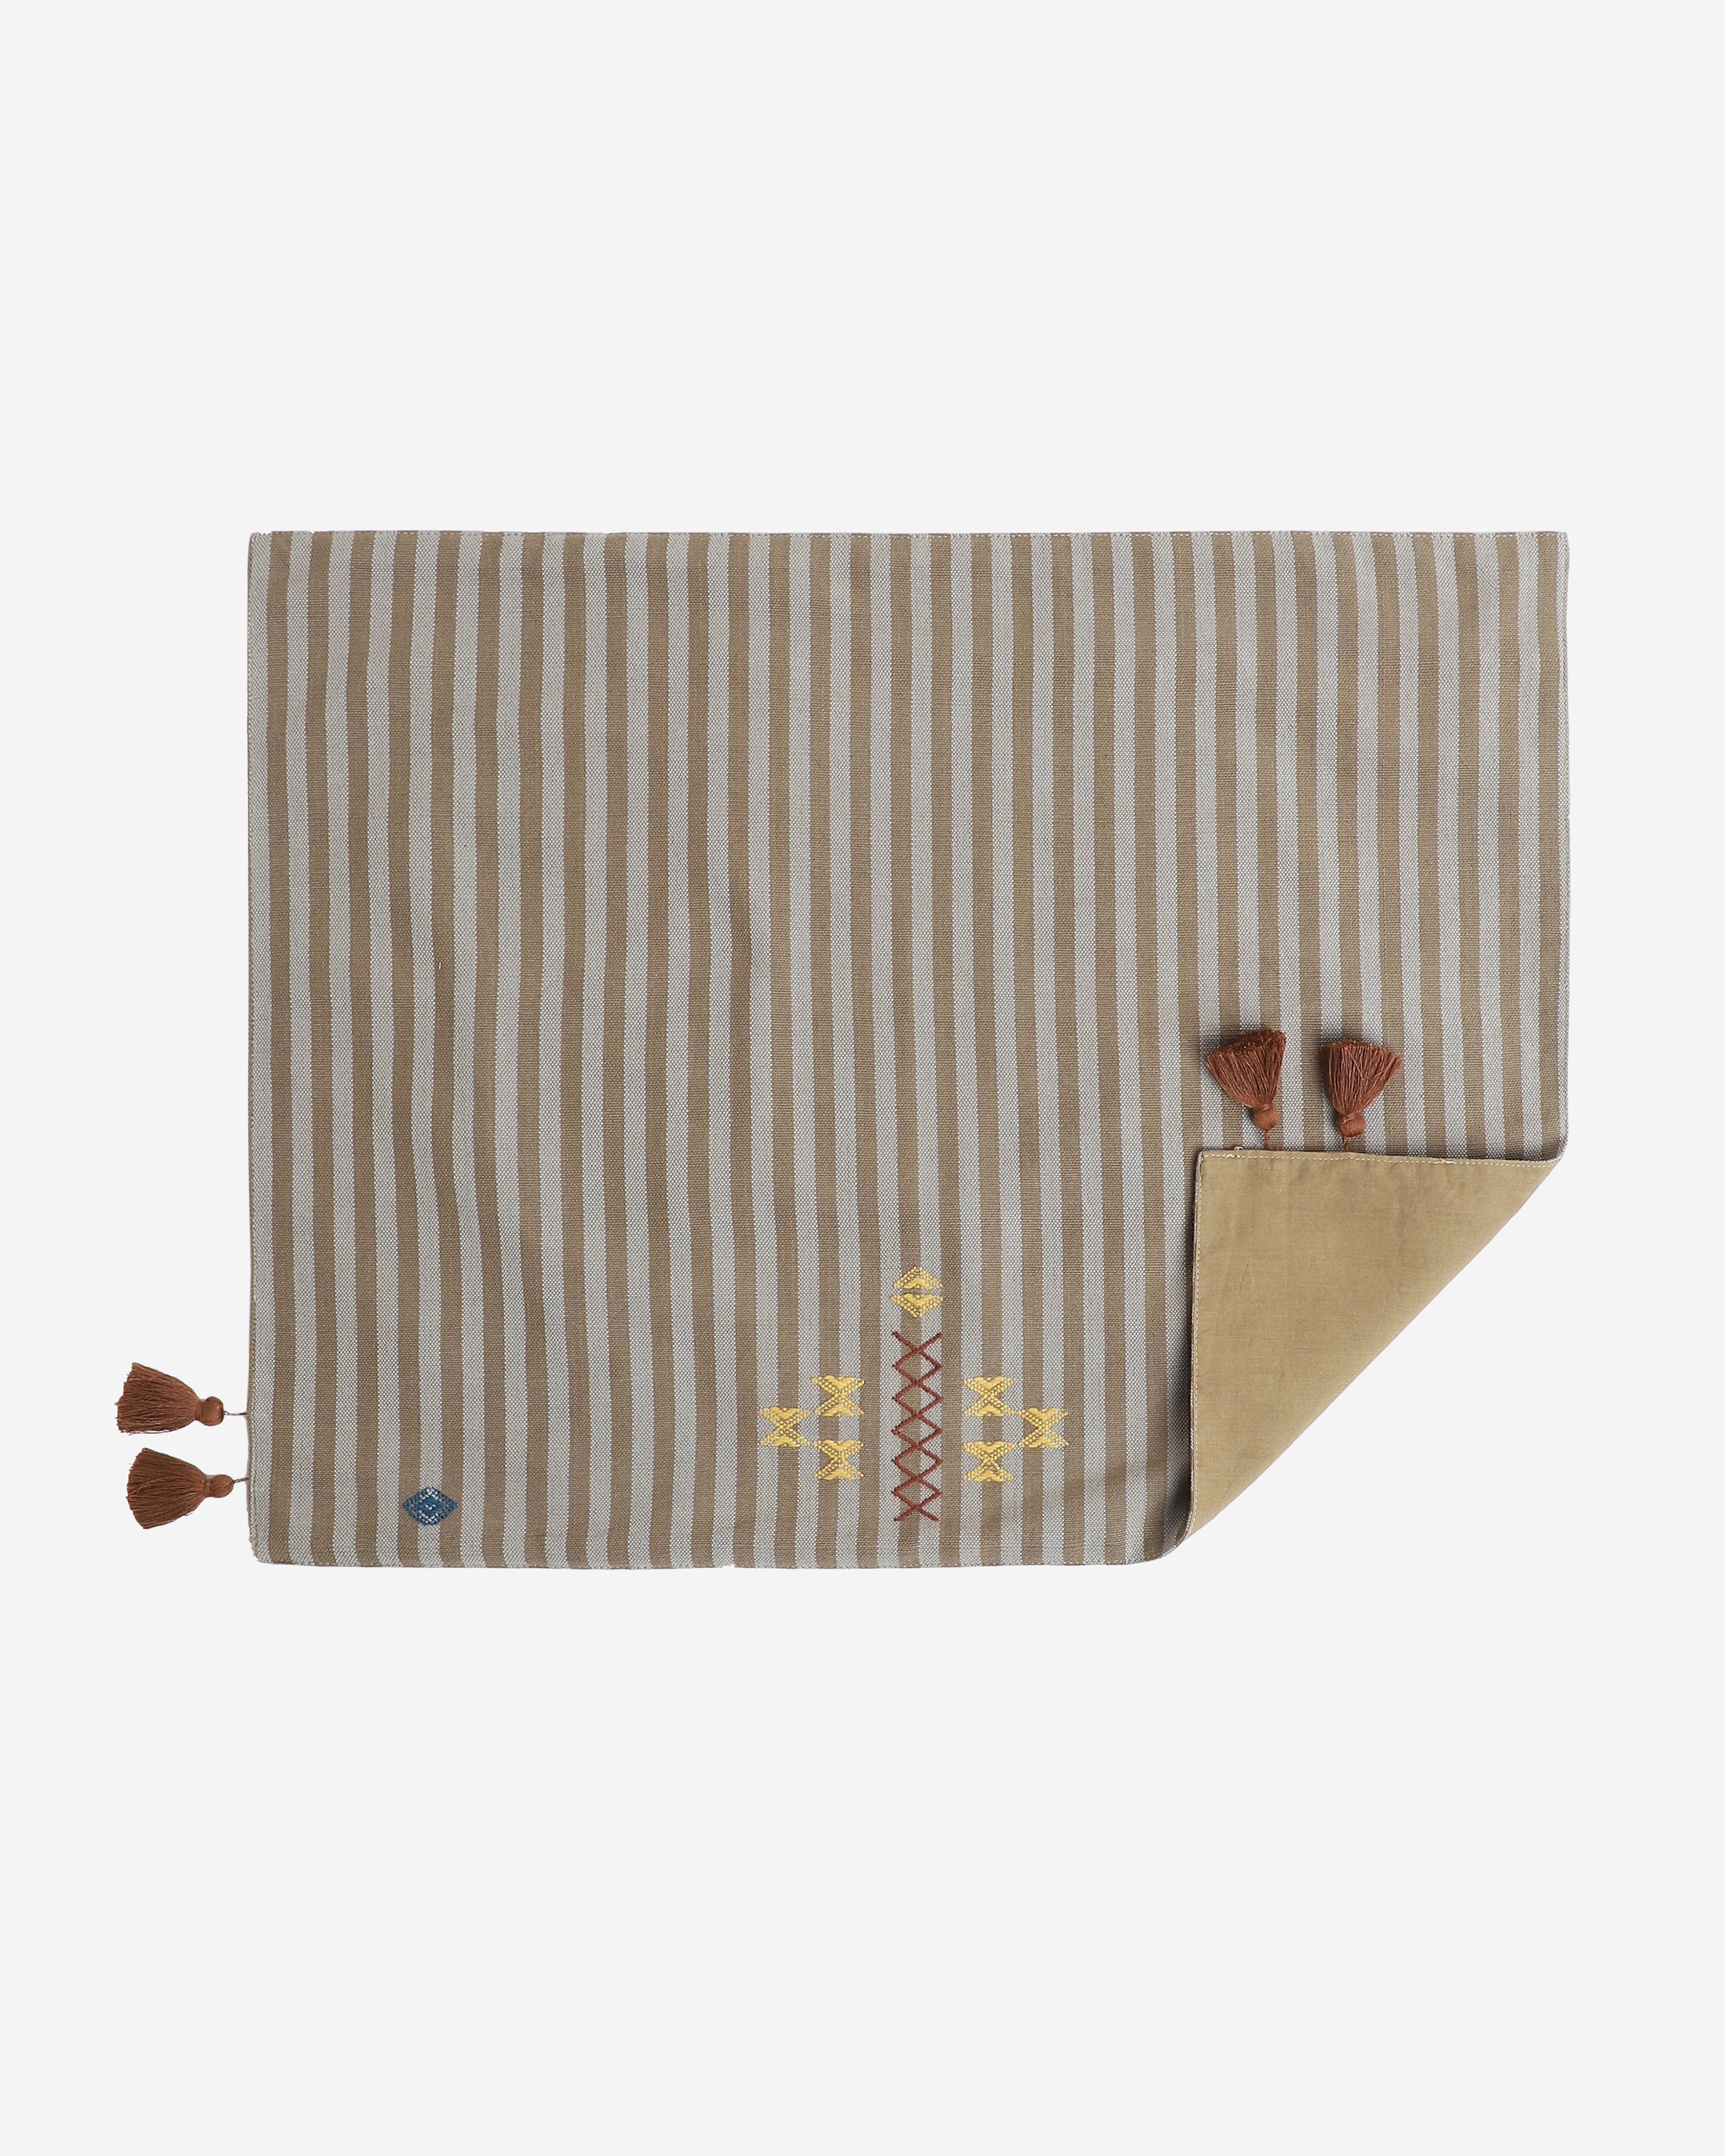 Charvi Extra Weft Cotton Table Mat | Set of 6 - Medium Brown